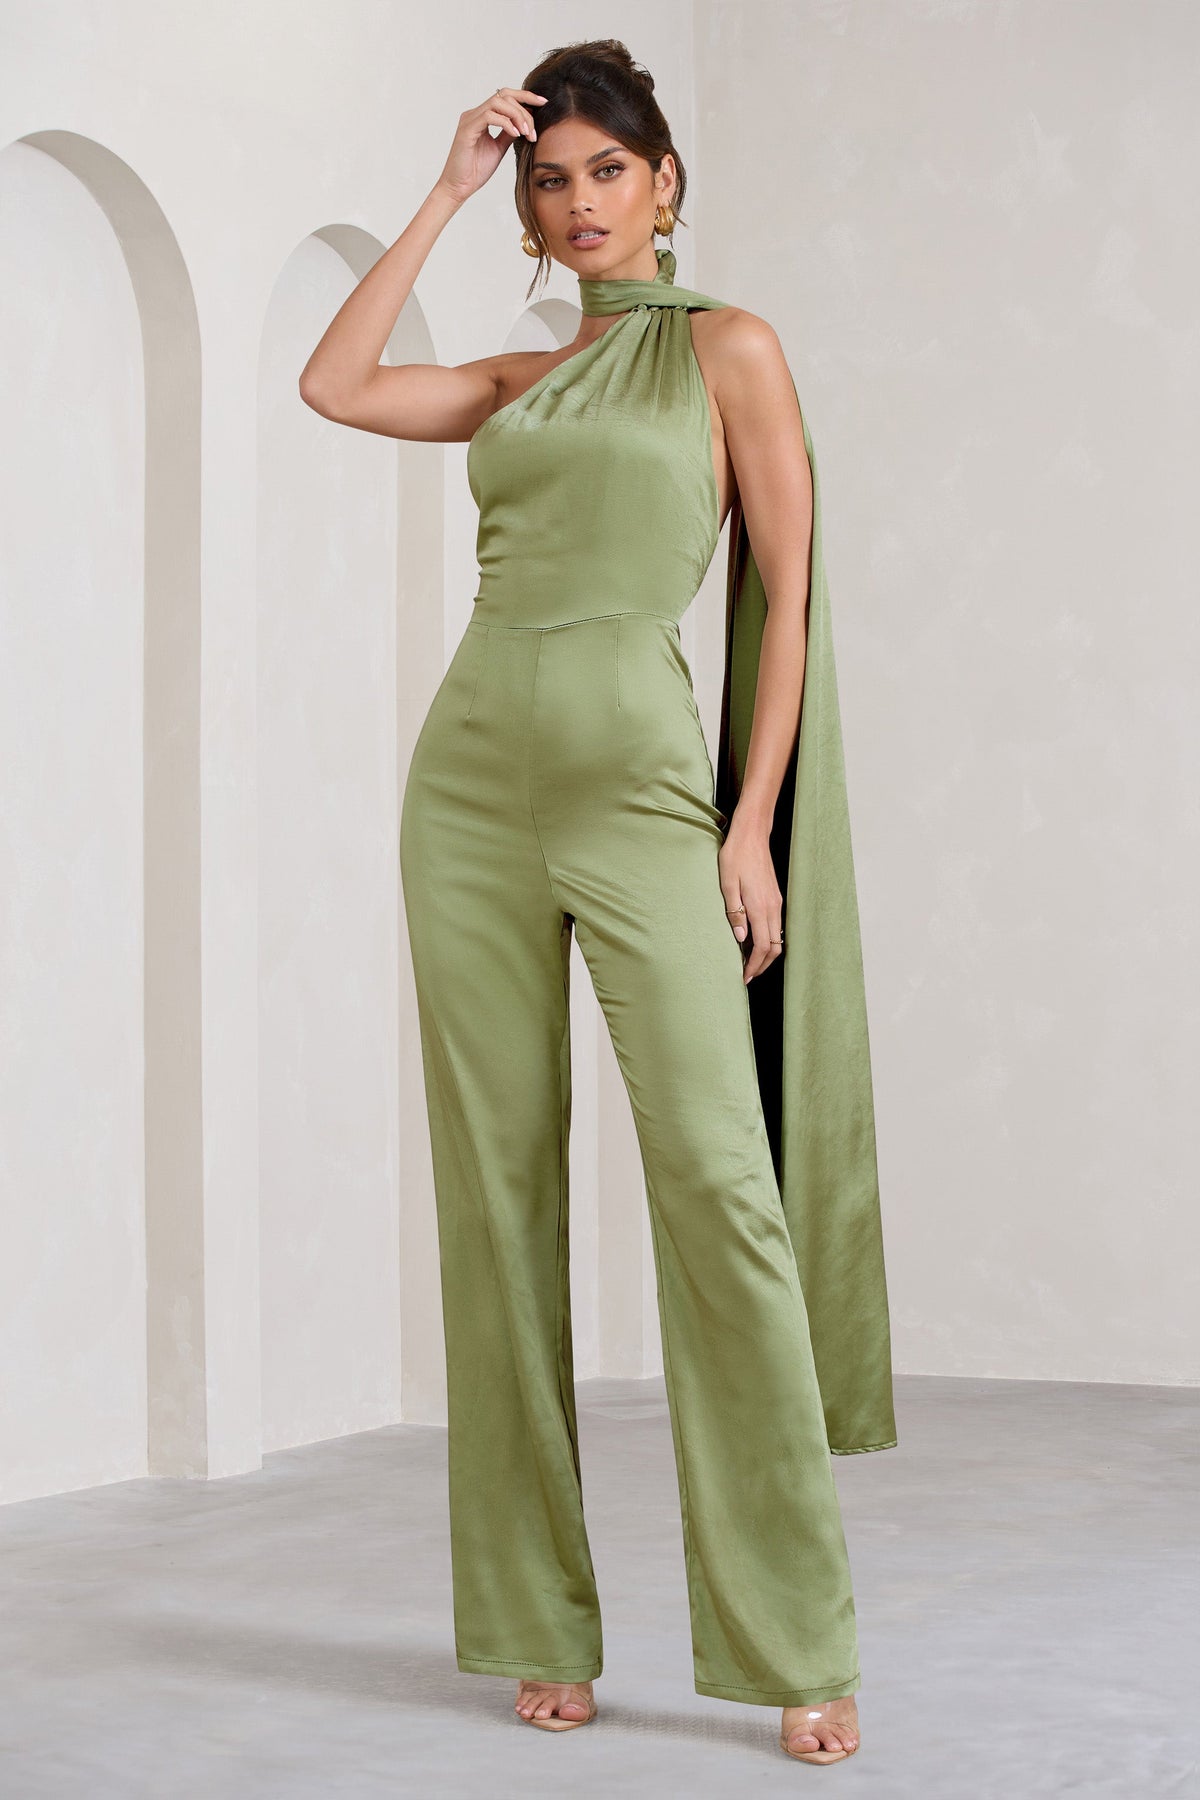 Details more than 227 olive green jumpsuit formal latest